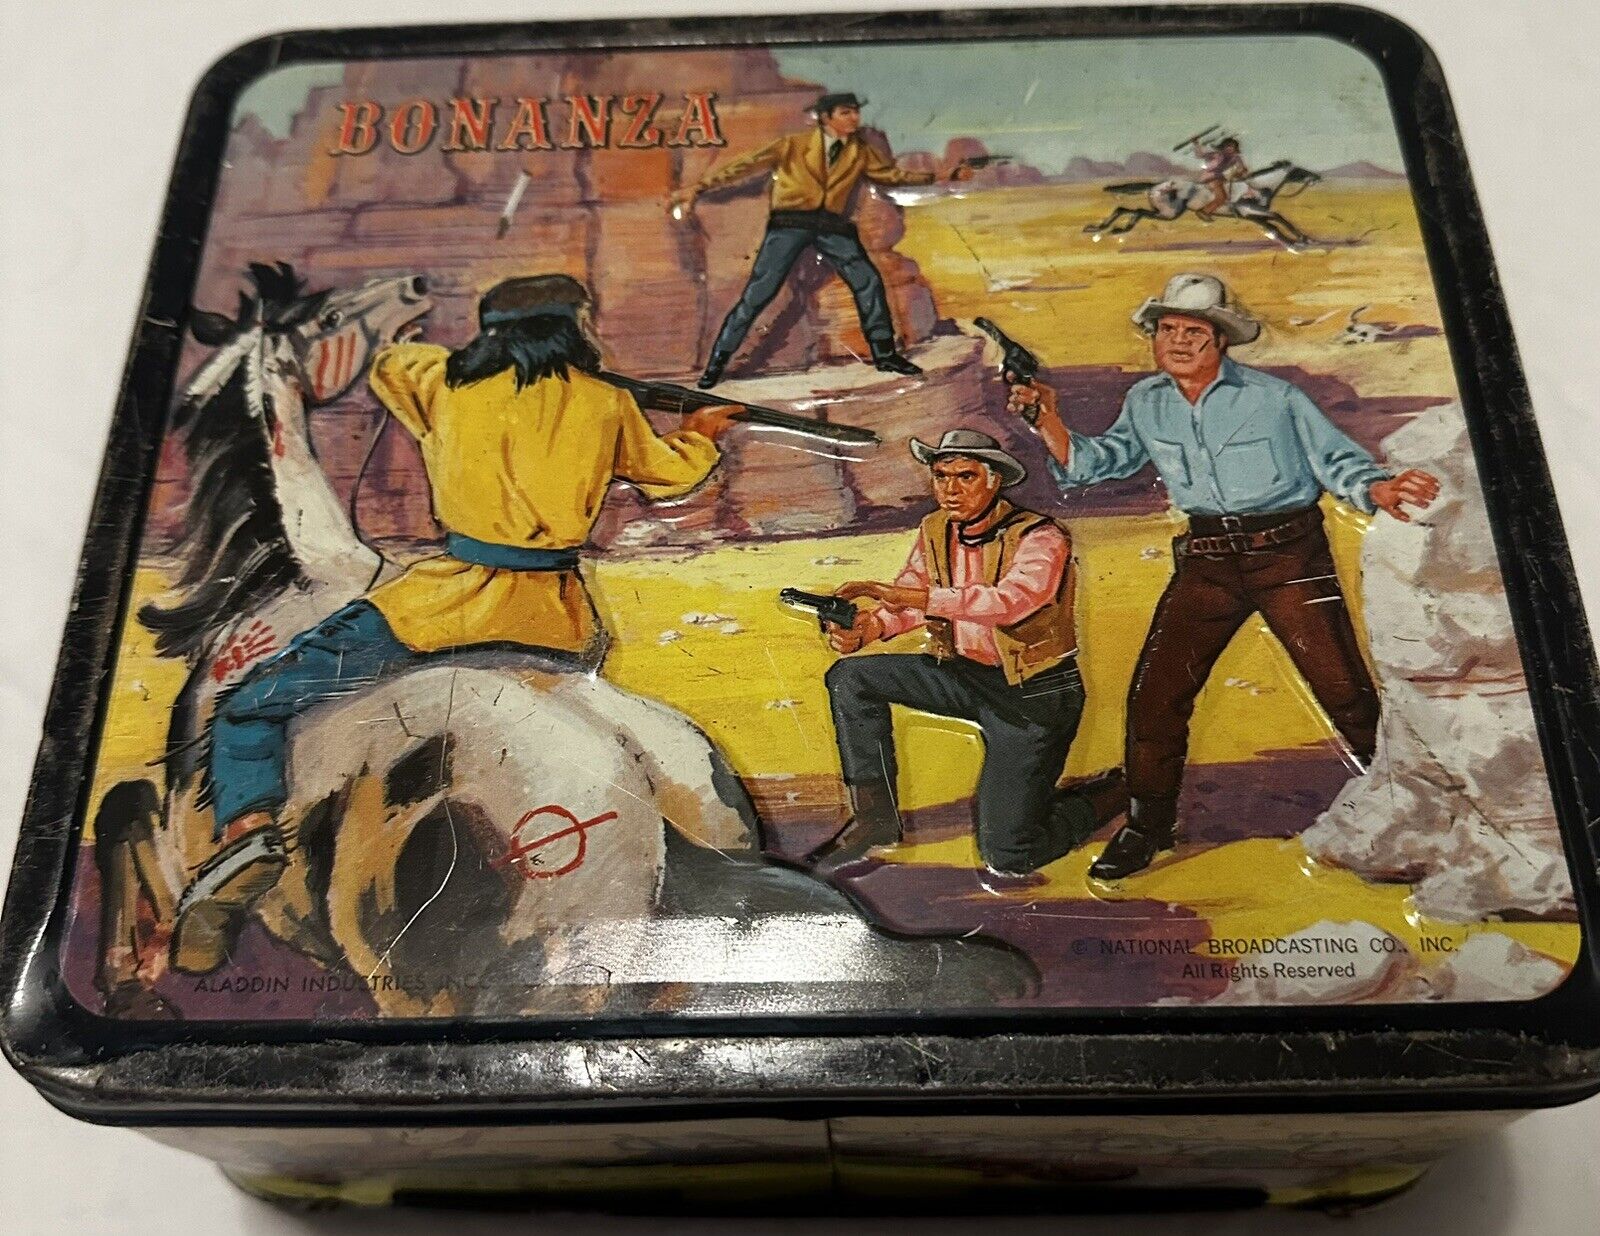 Vintage Bonanza Lunch Box Aladdin Industries Inc No Thermos 1965